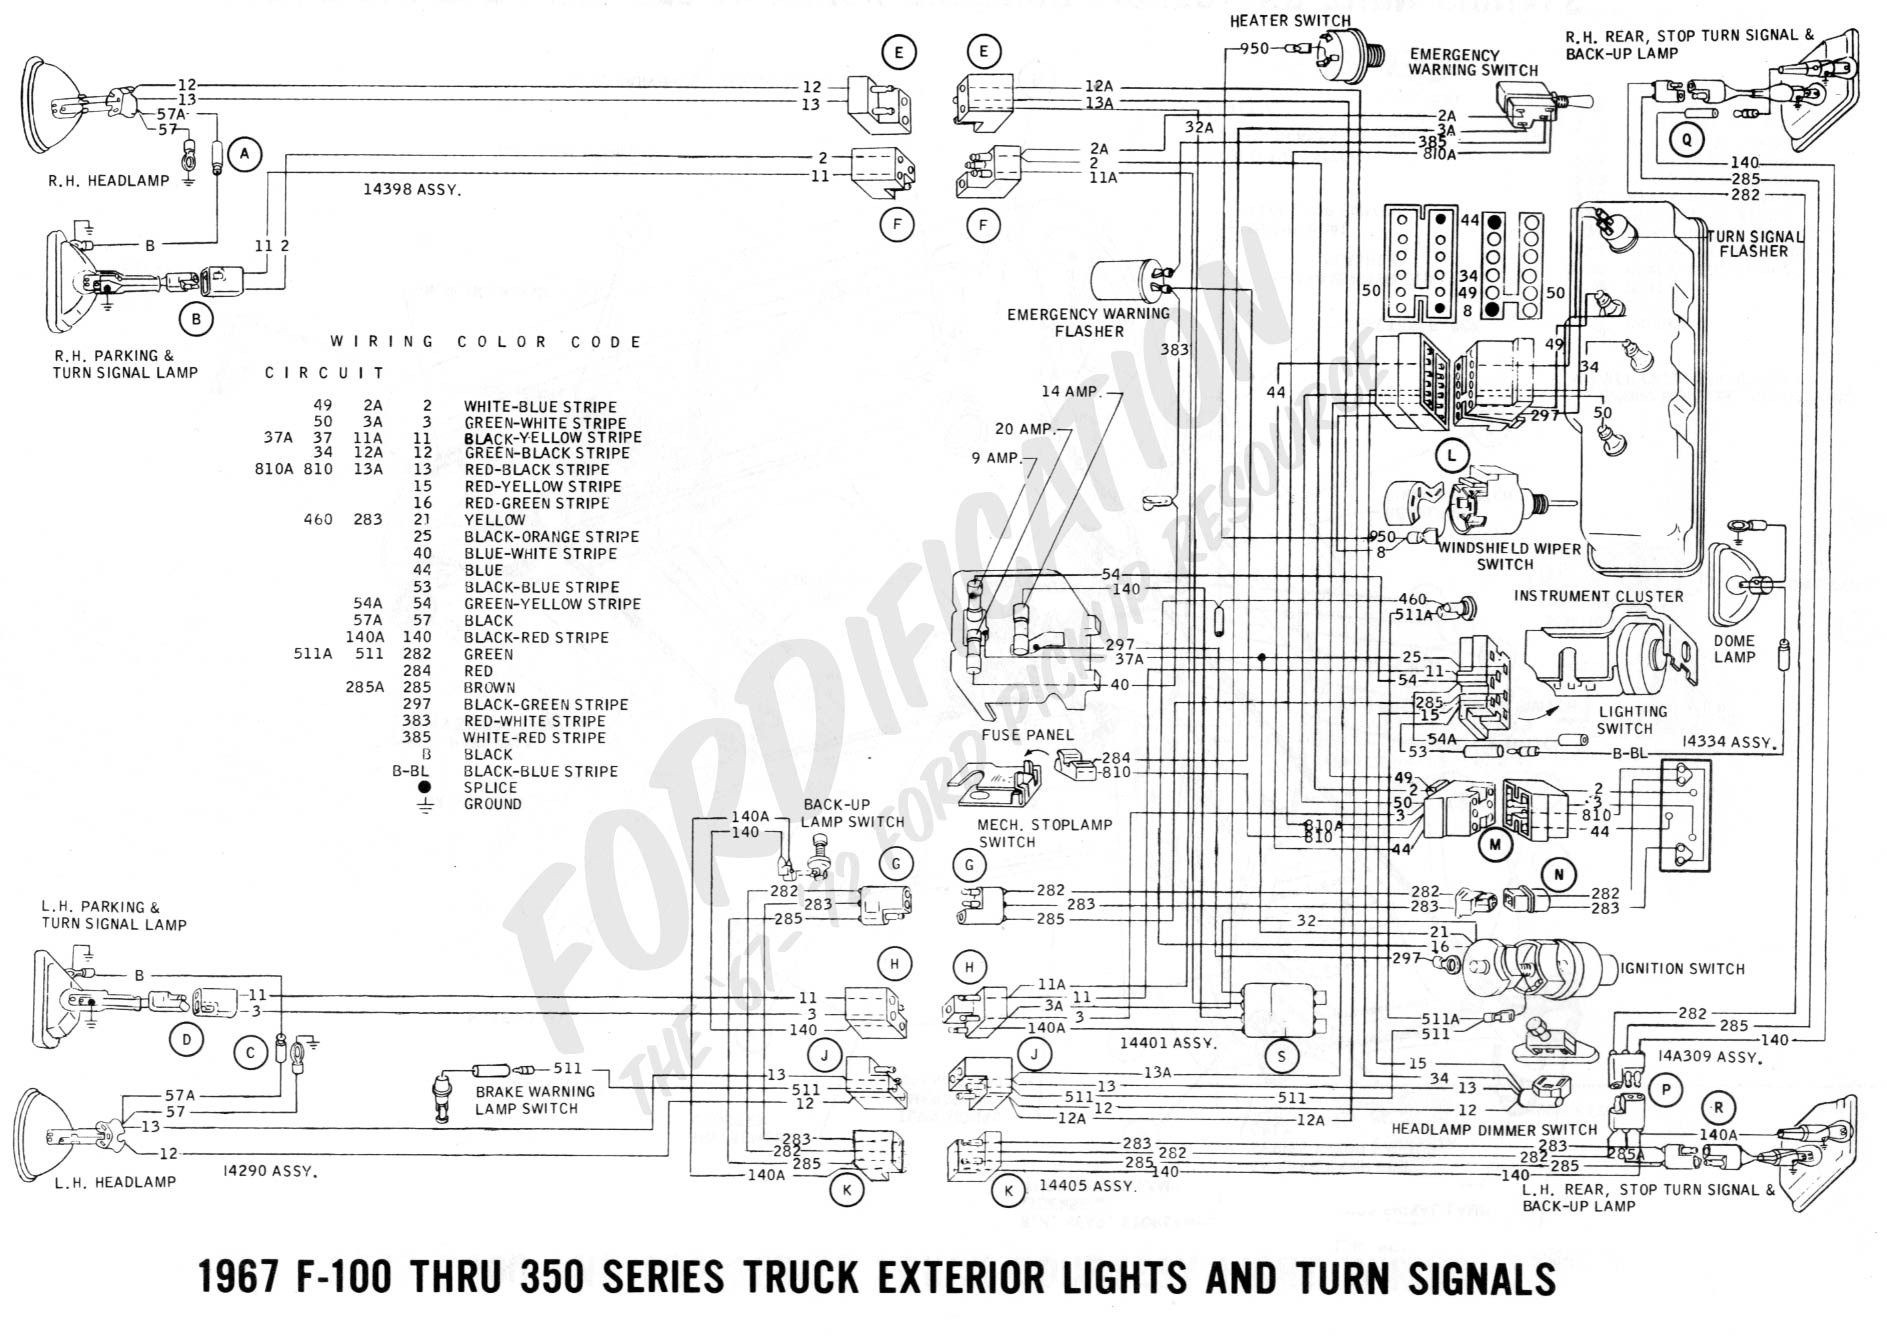 1967 F 100 thru F 350 exterior lights and turn signals 02